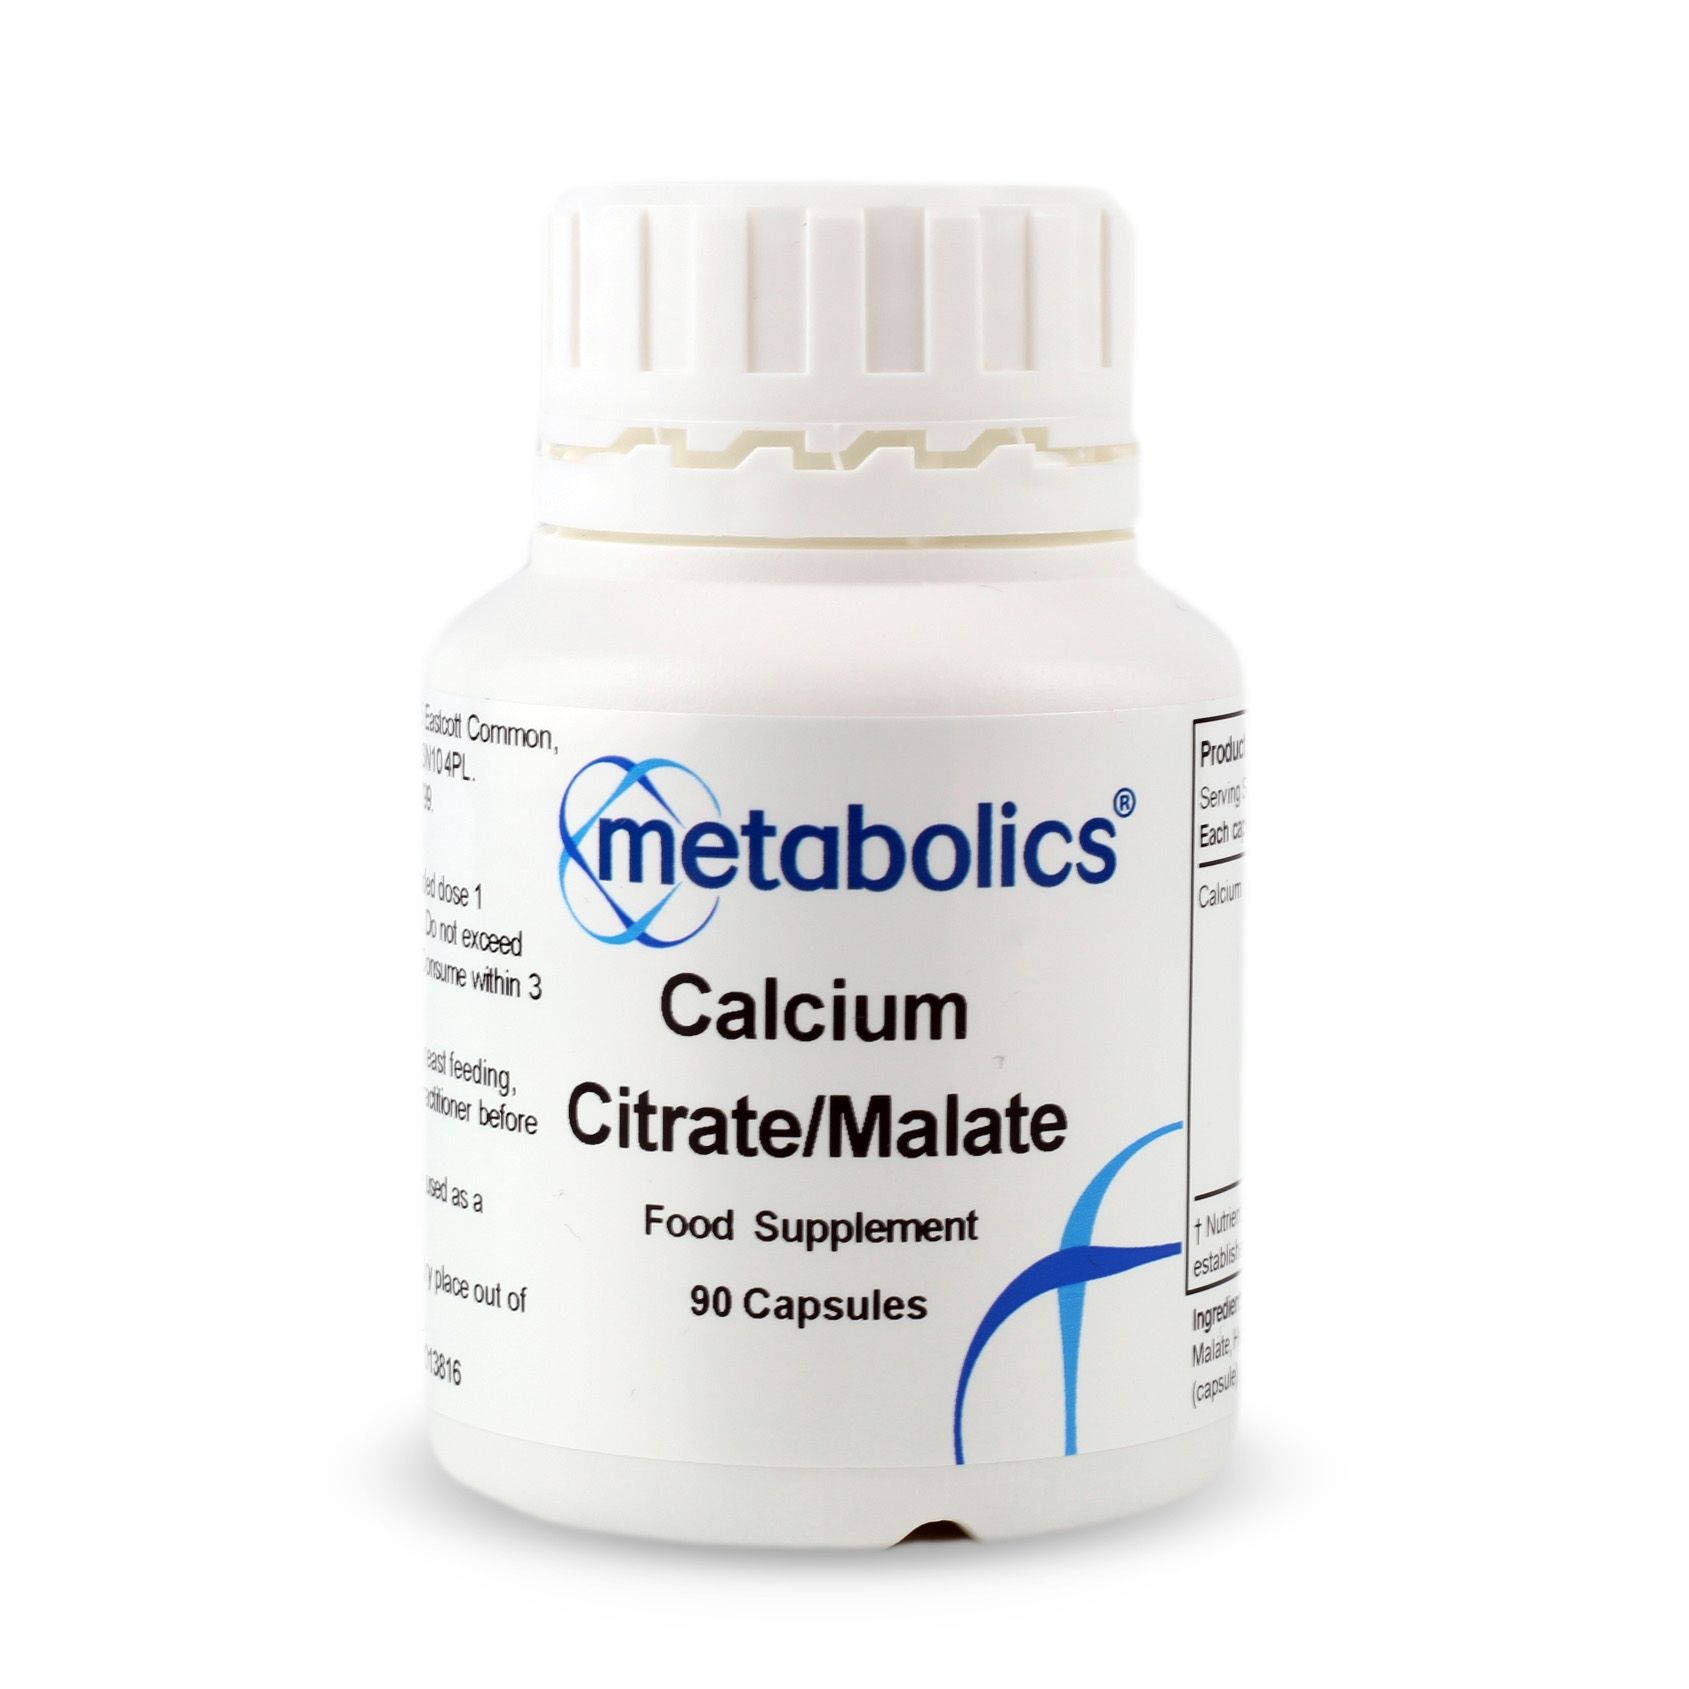 Calcium Citrate Malate